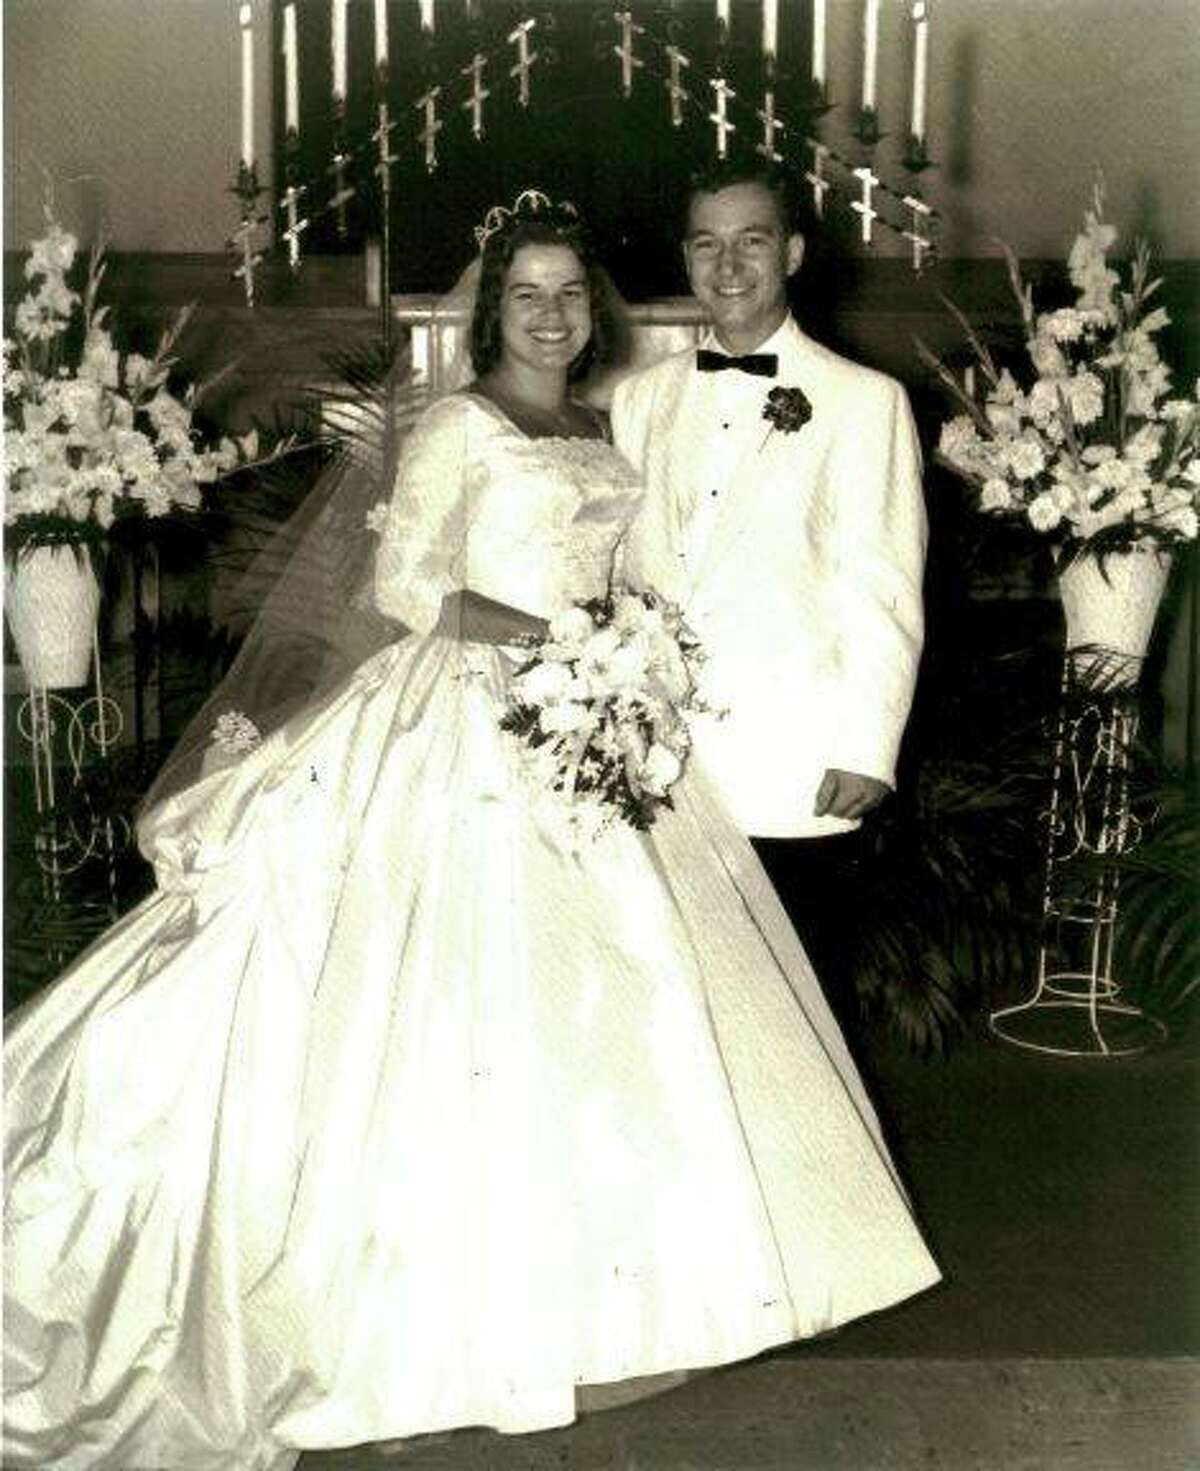 Vernon and Brenda Langer at their wedding